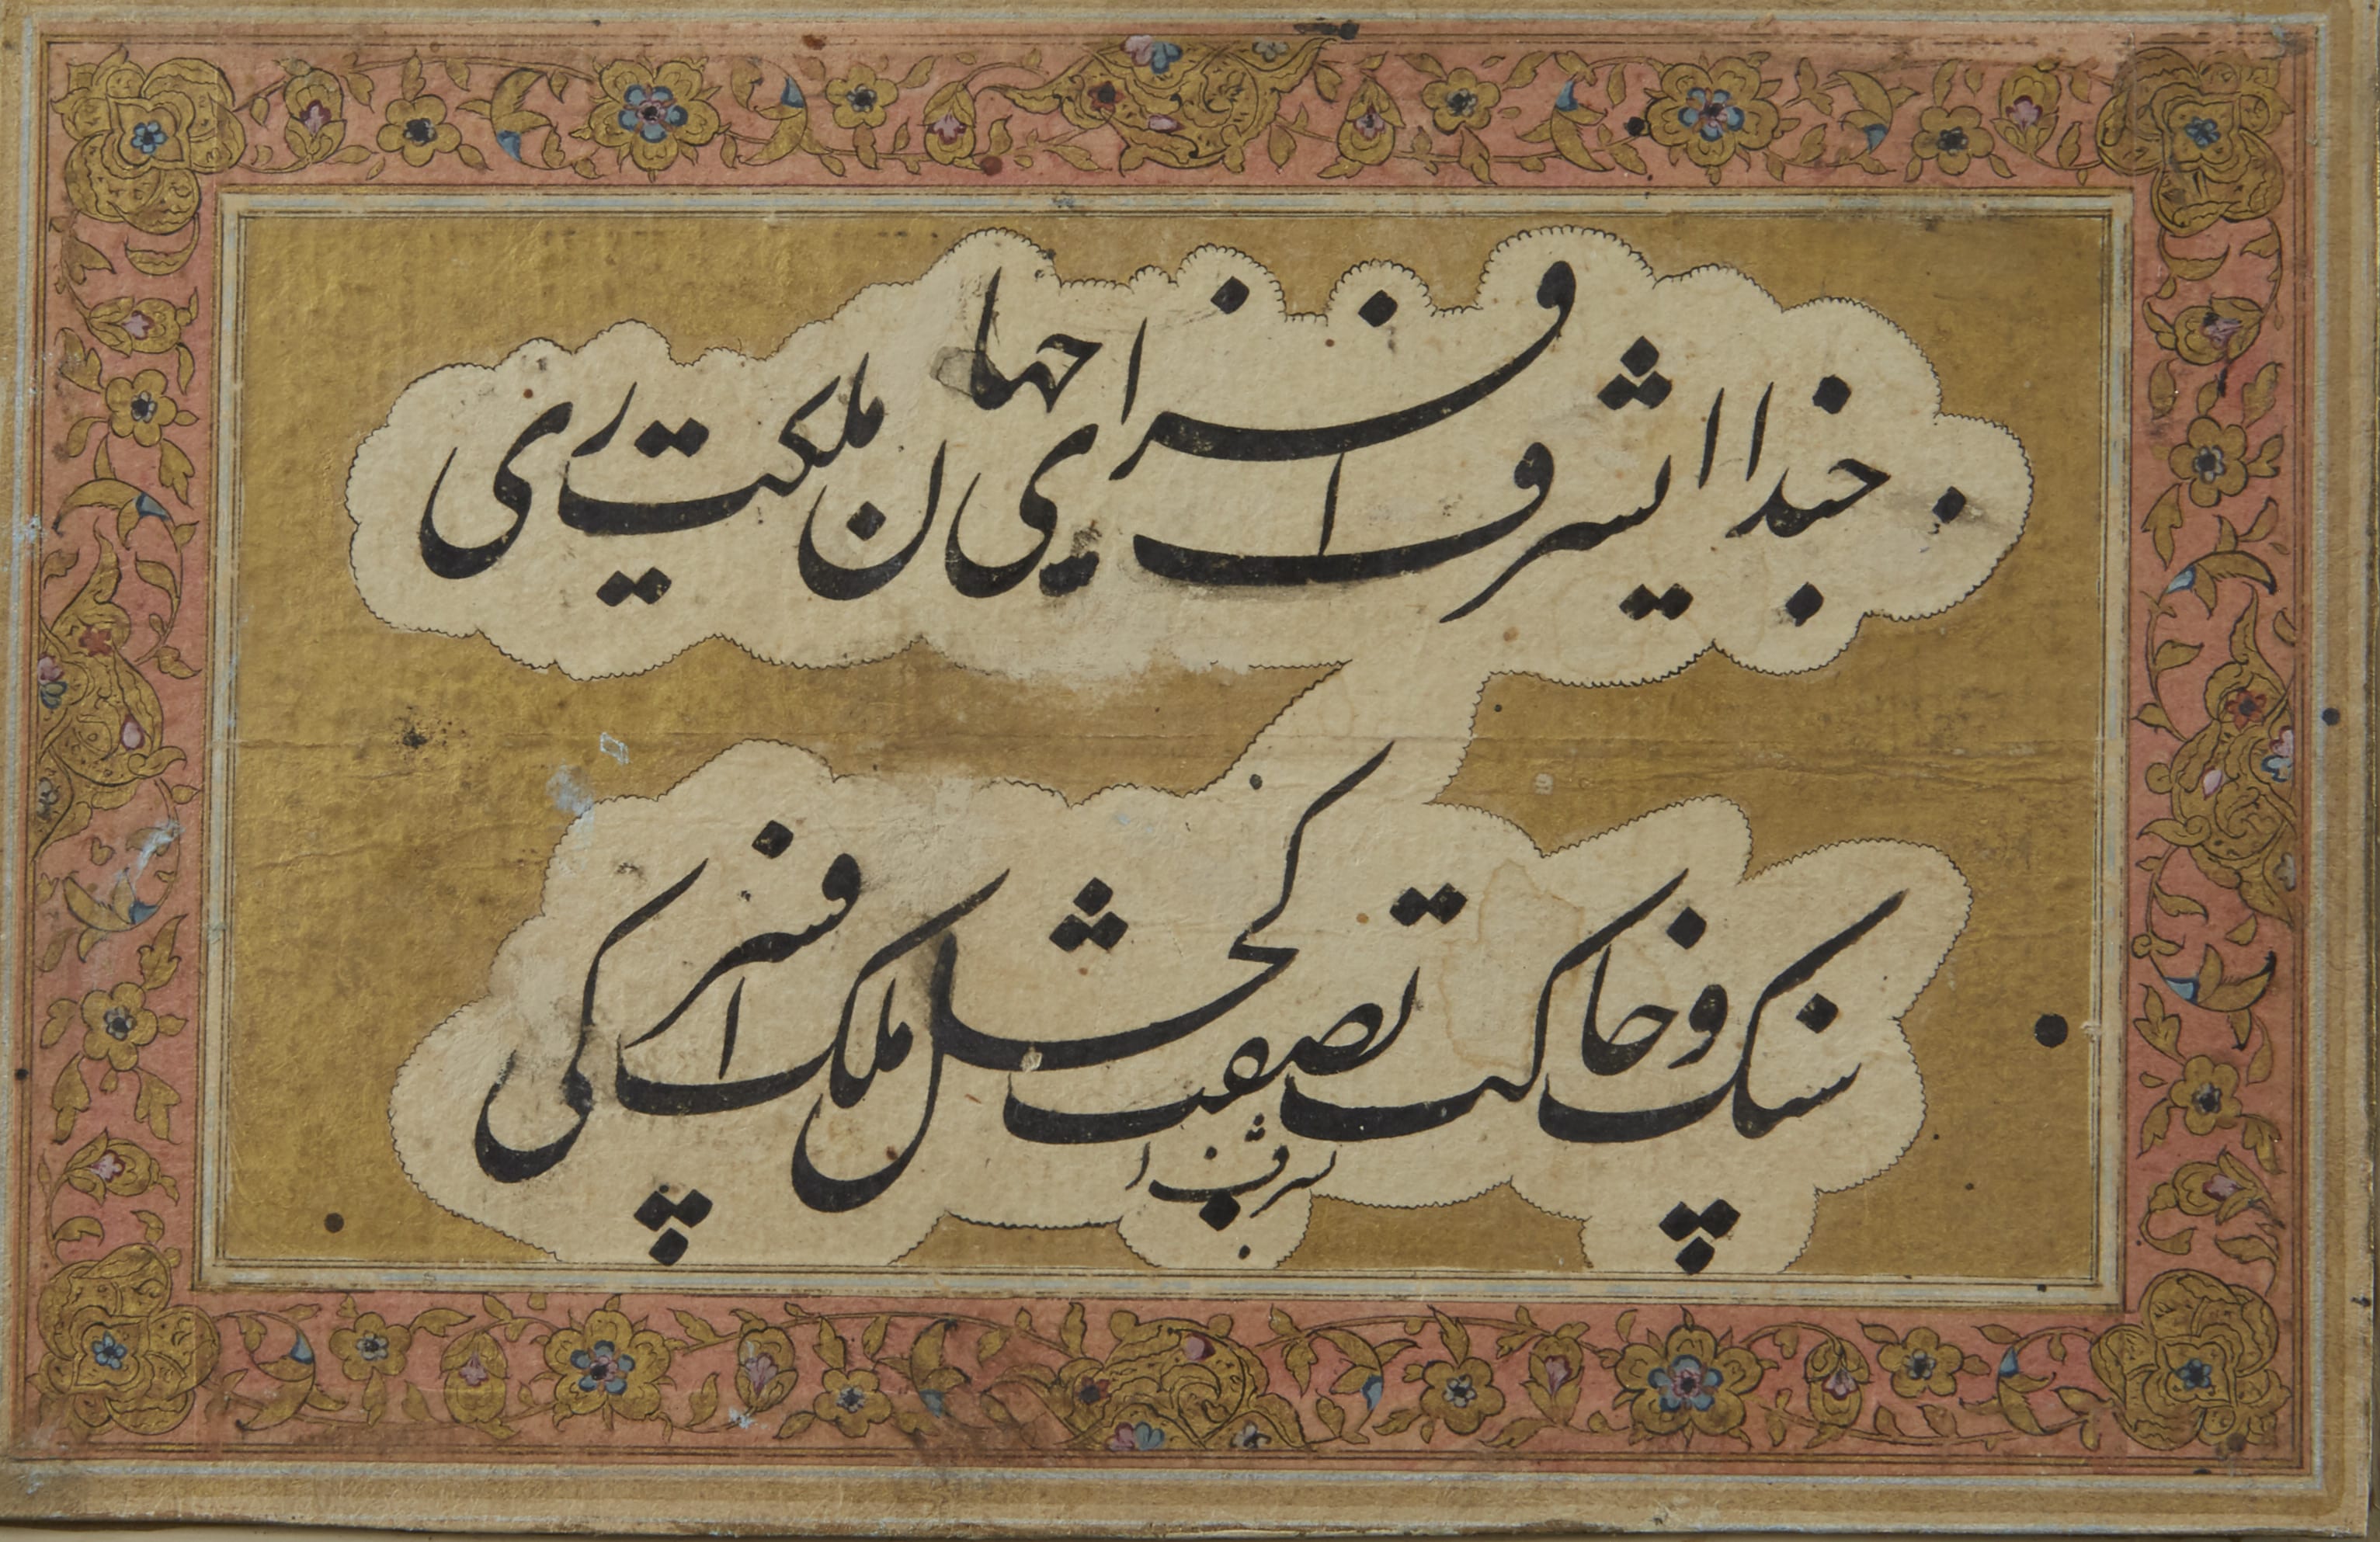 Lot 168: Fine 19th century Persian Calligraphy Illuminated Manuscript Page